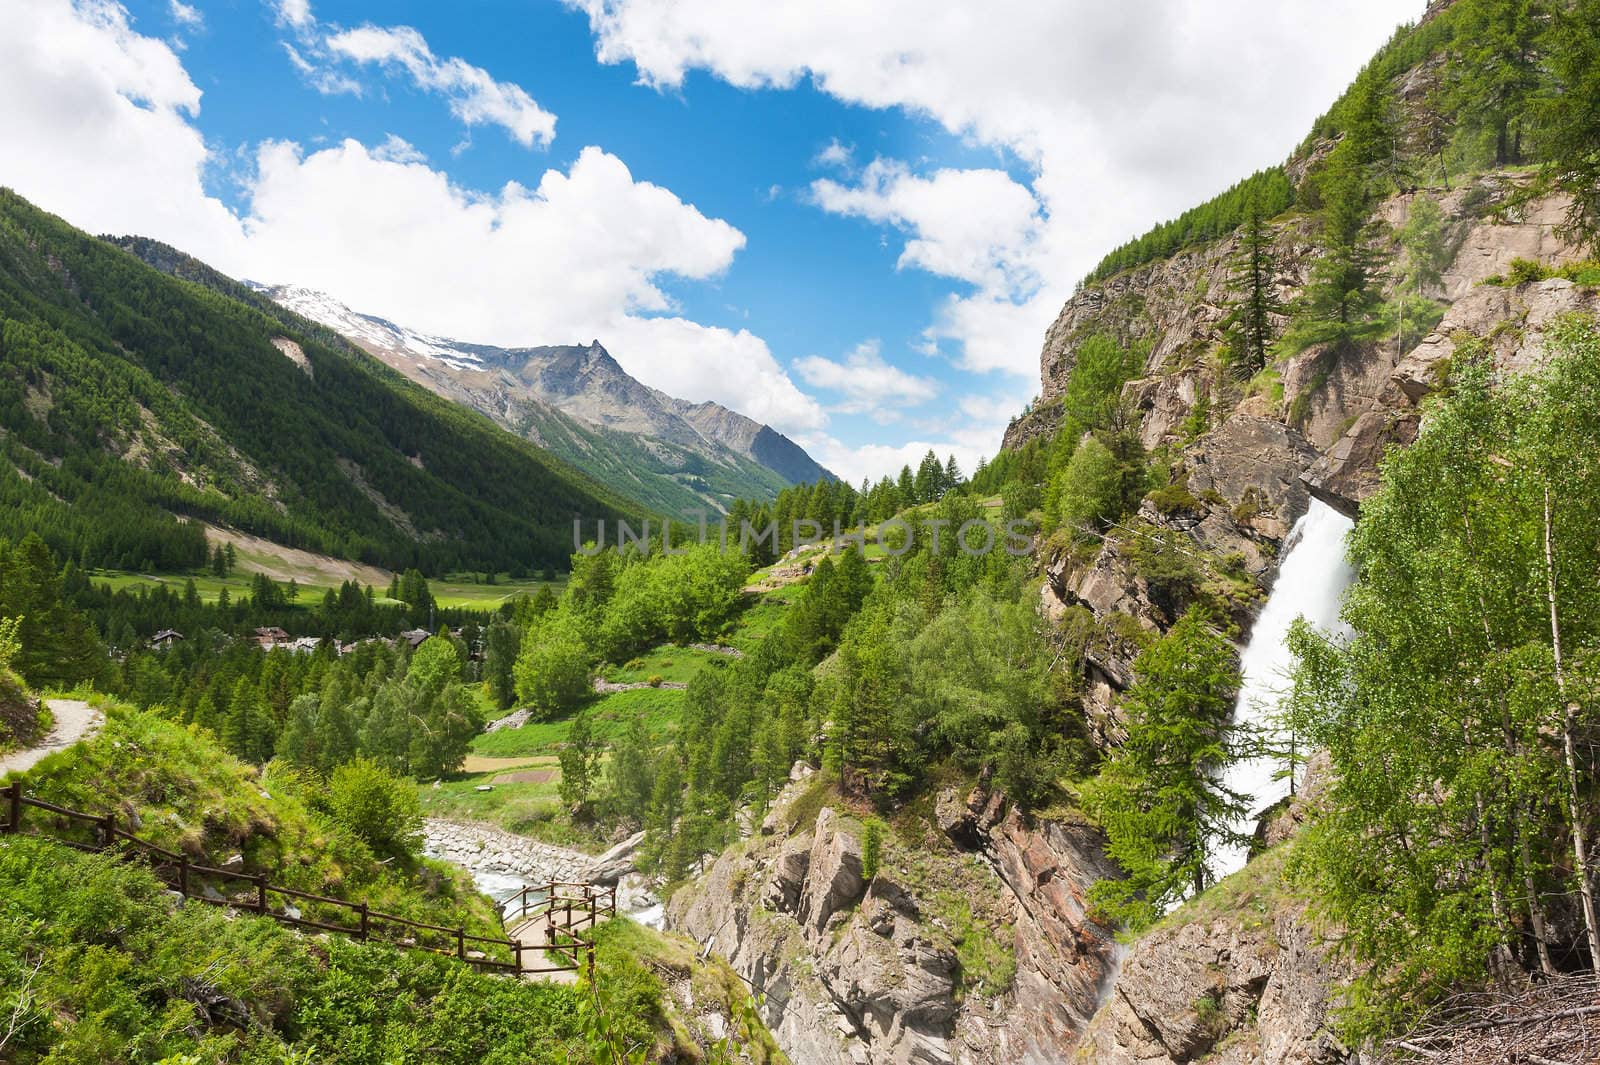 Mountain valley in Gran Paradiso National Park, Italy